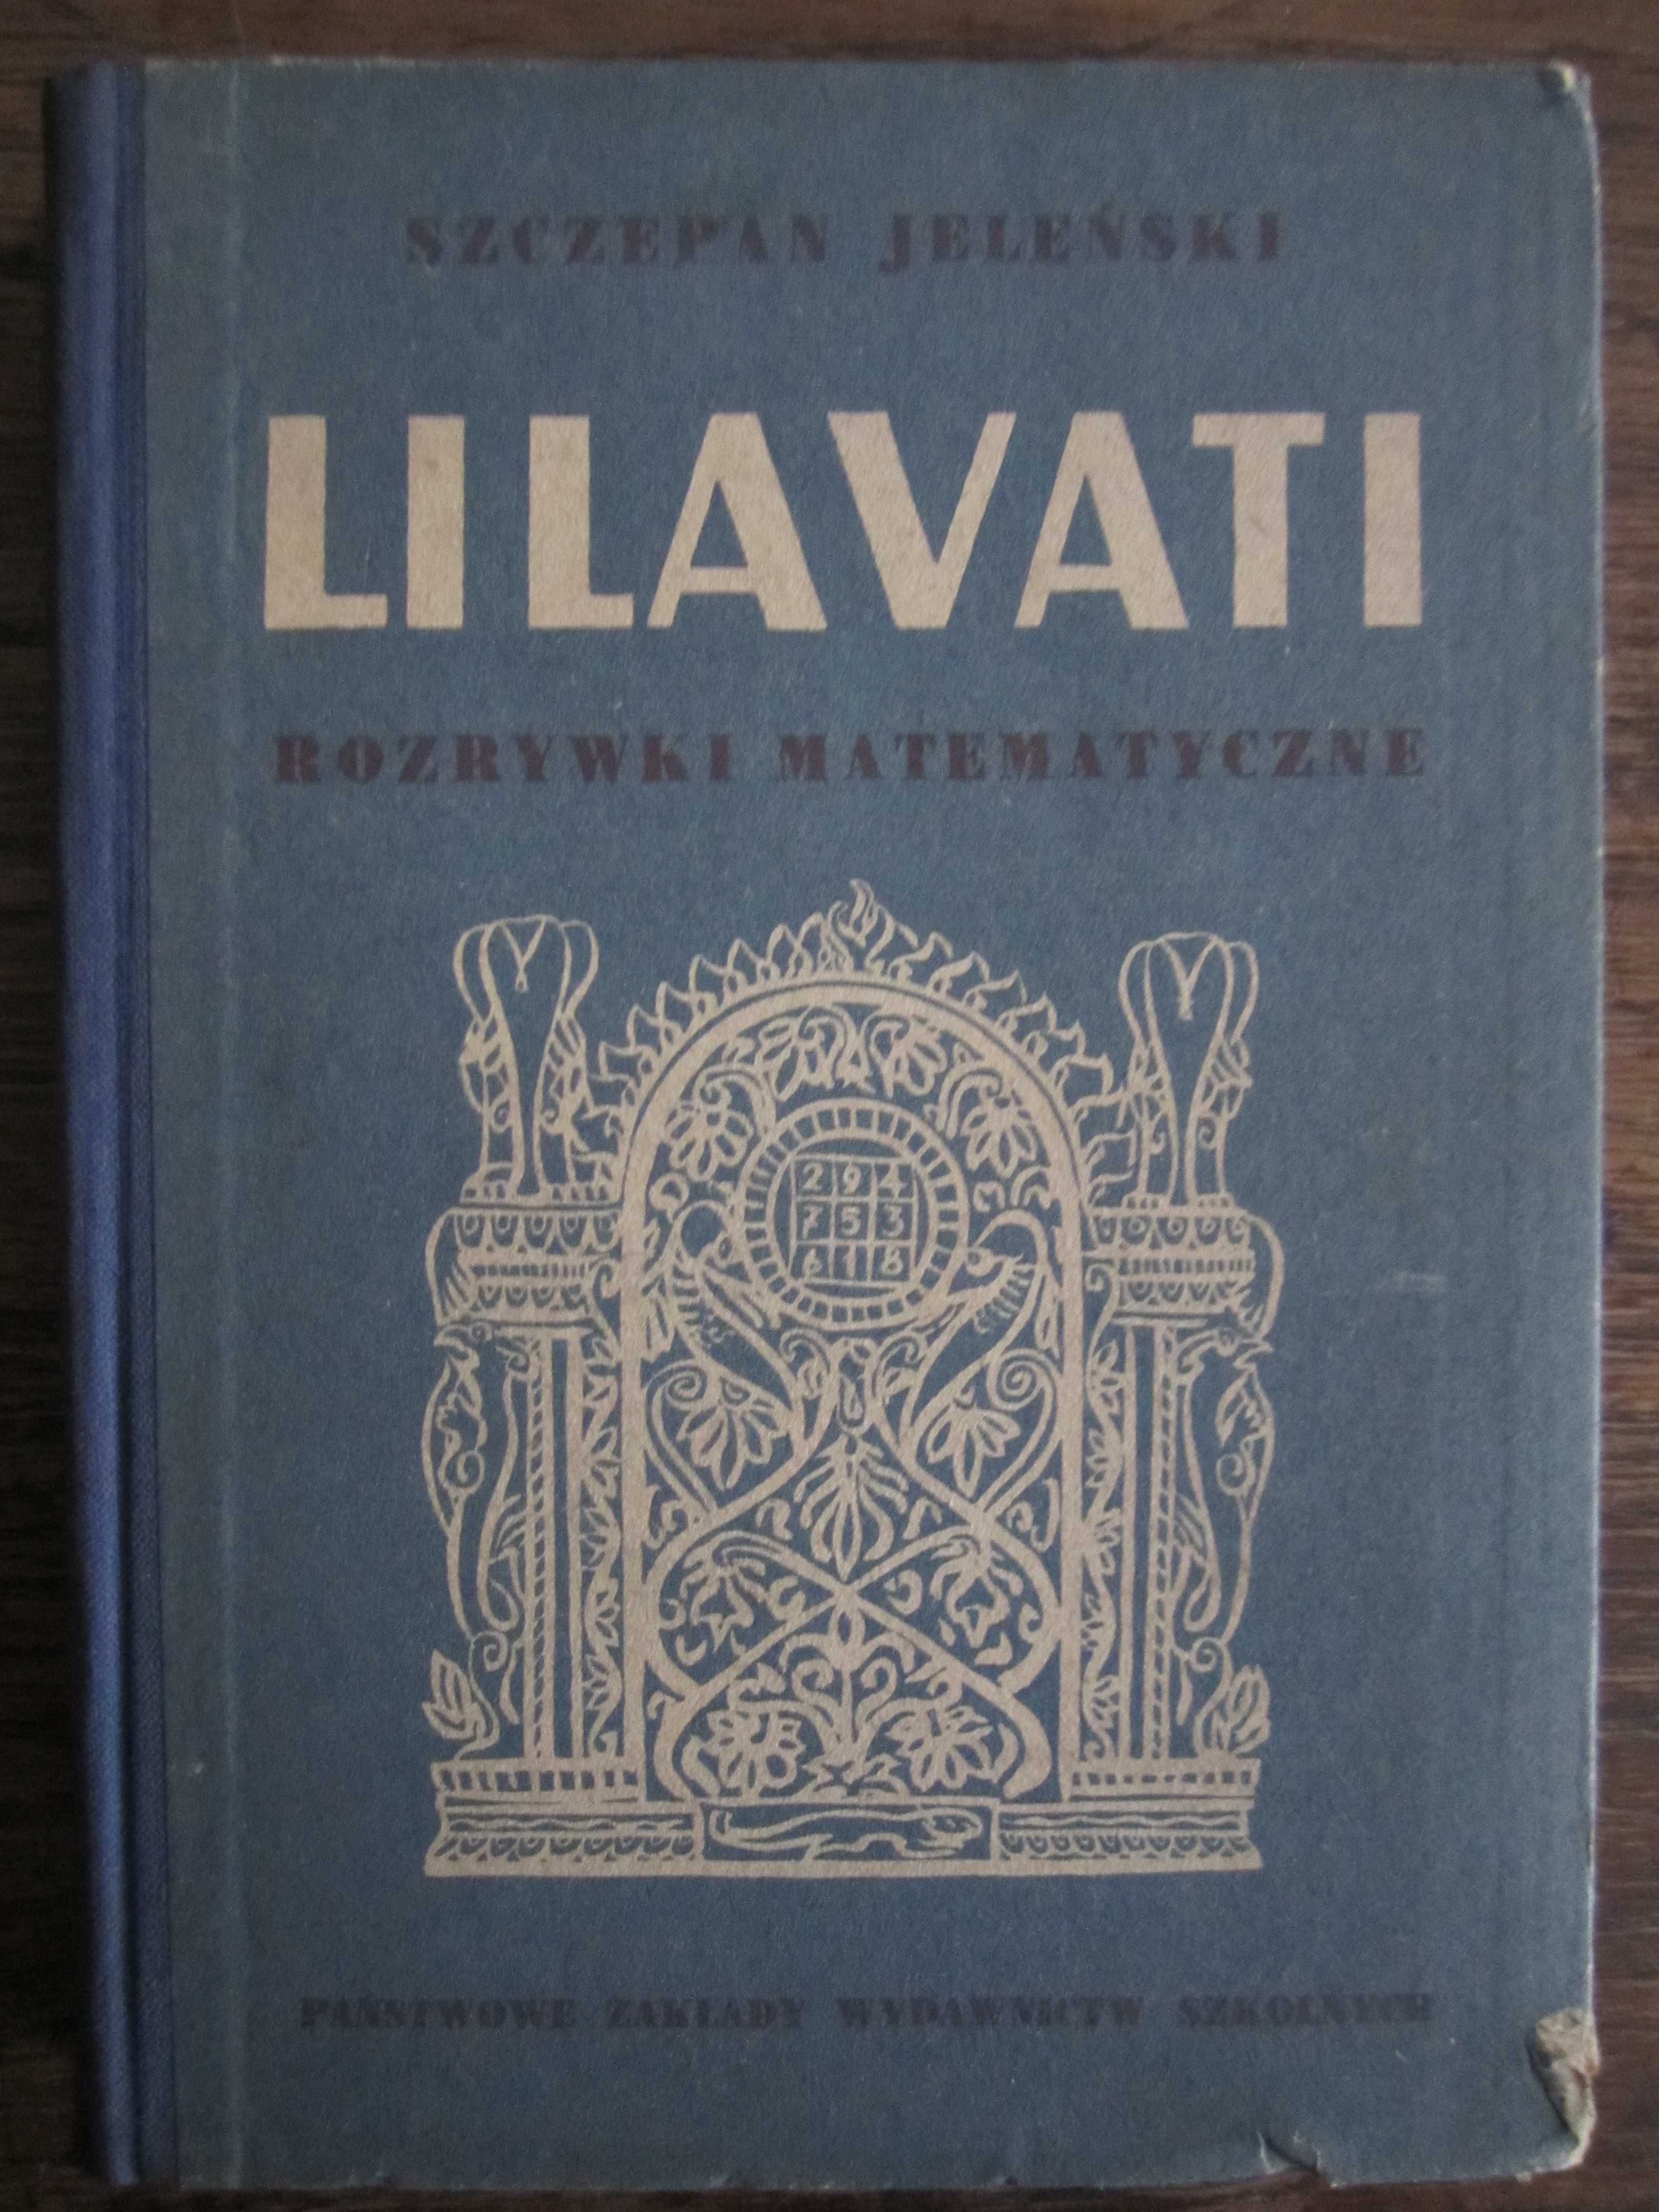 Książka "Lilavati - Rozrywki Matematyczne" - Jeleński -1956 rok.